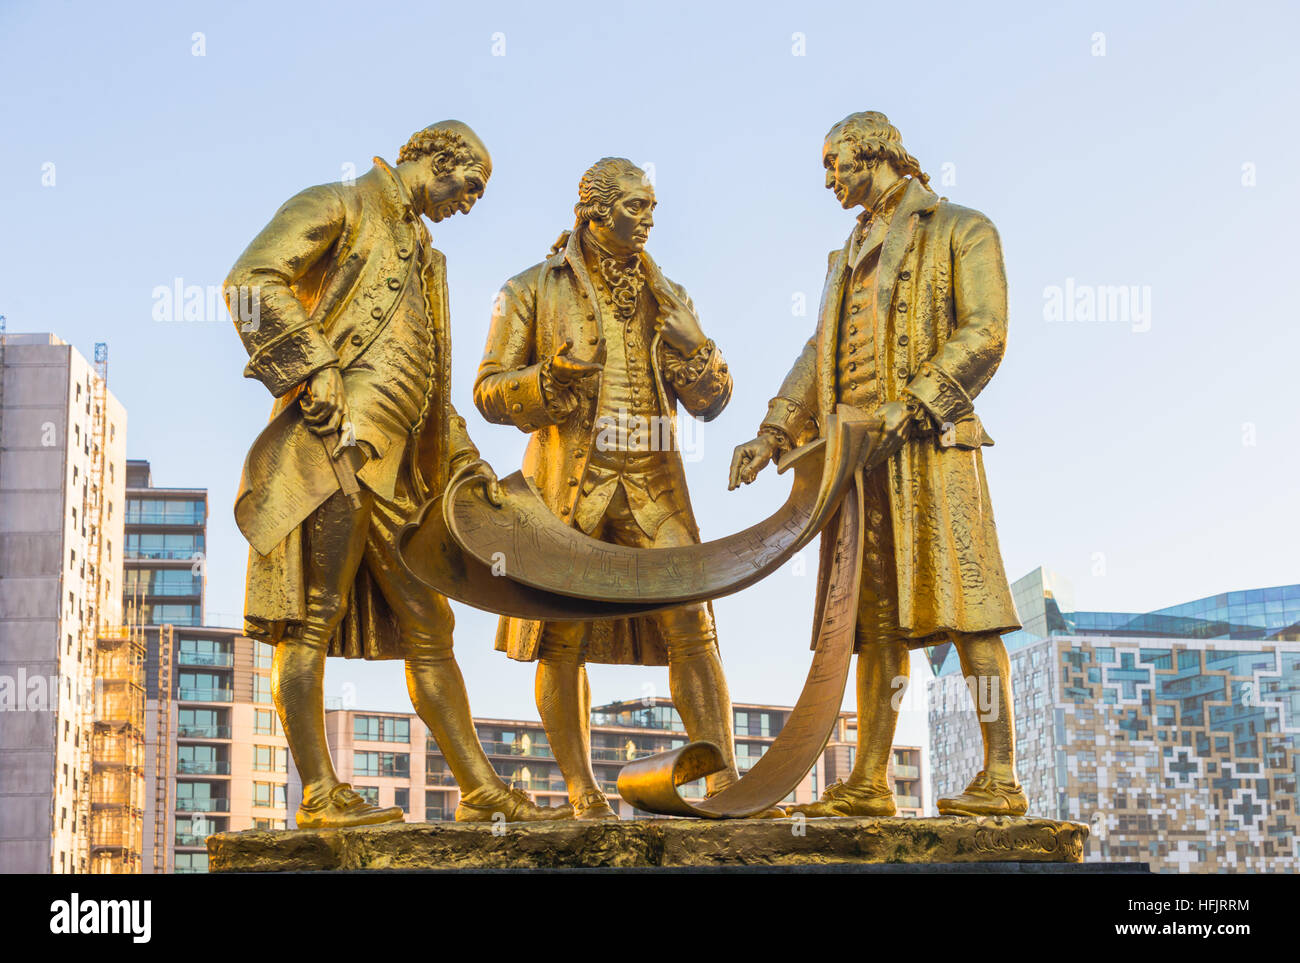 La estatua de bronce dorado de Matthew Boulton, James Watt y William Murdoch, Broad Street, Birmingham, Reino Unido Foto de stock